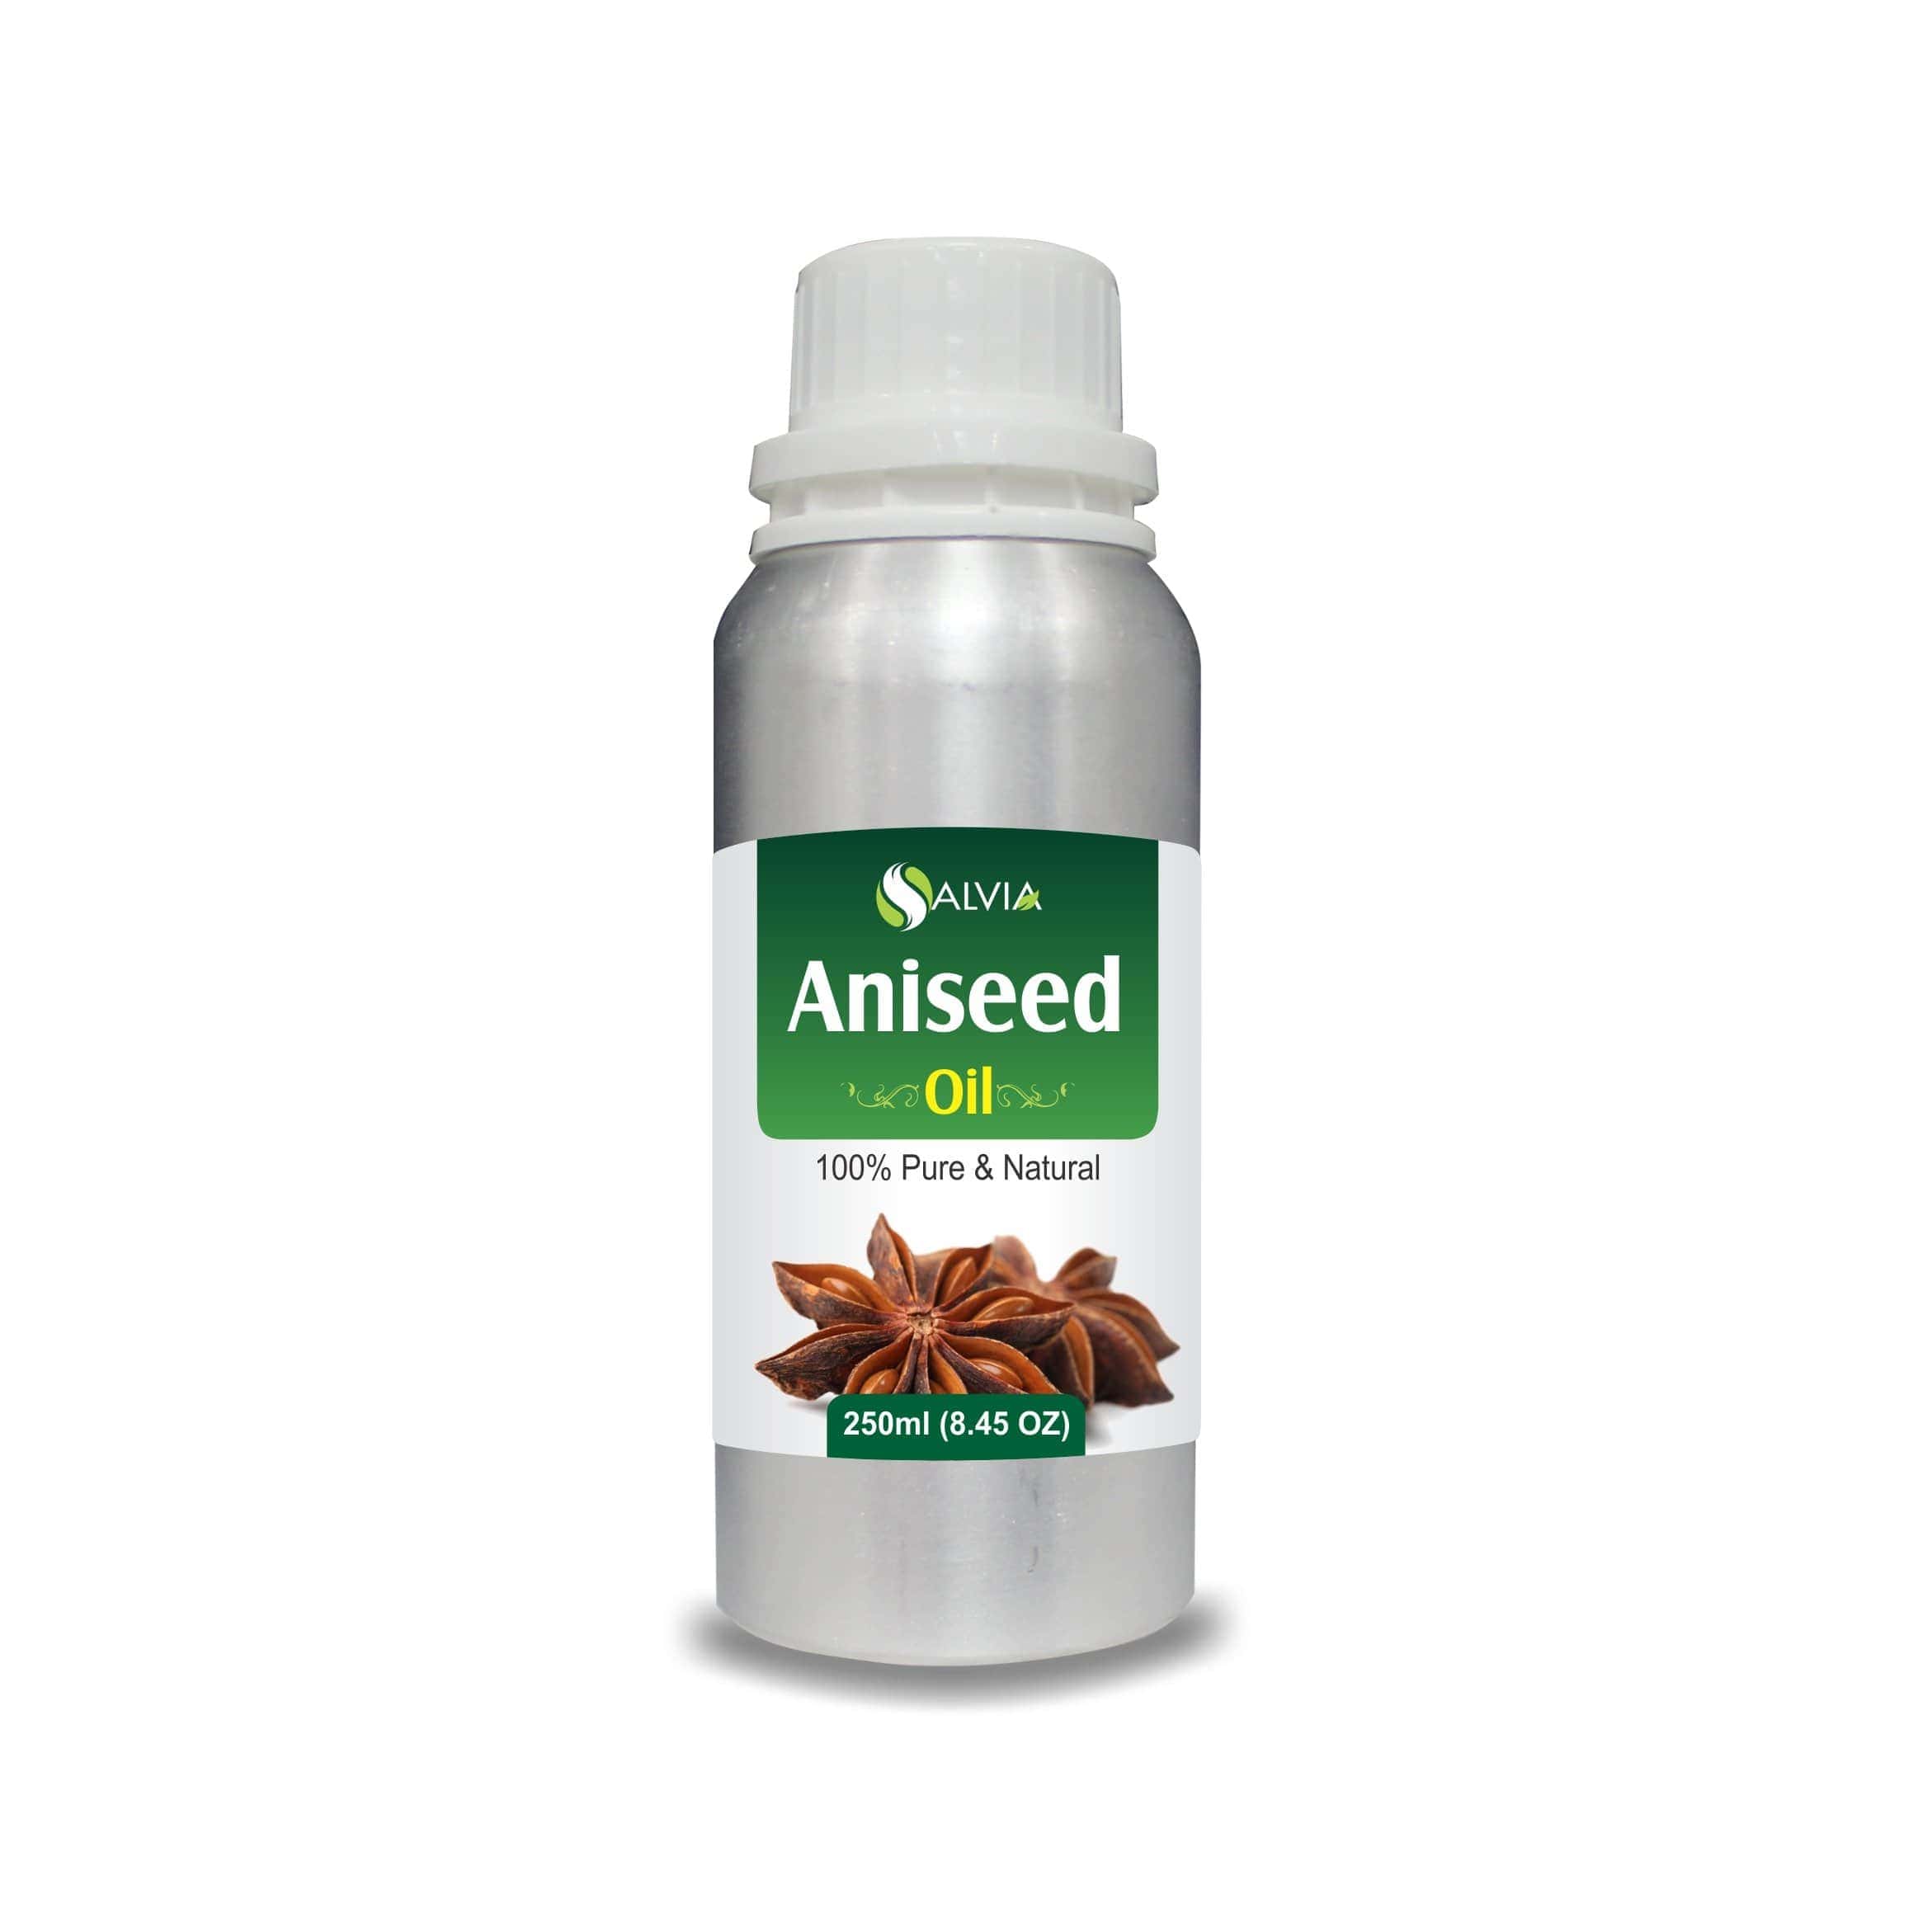  aniseed oil for birds